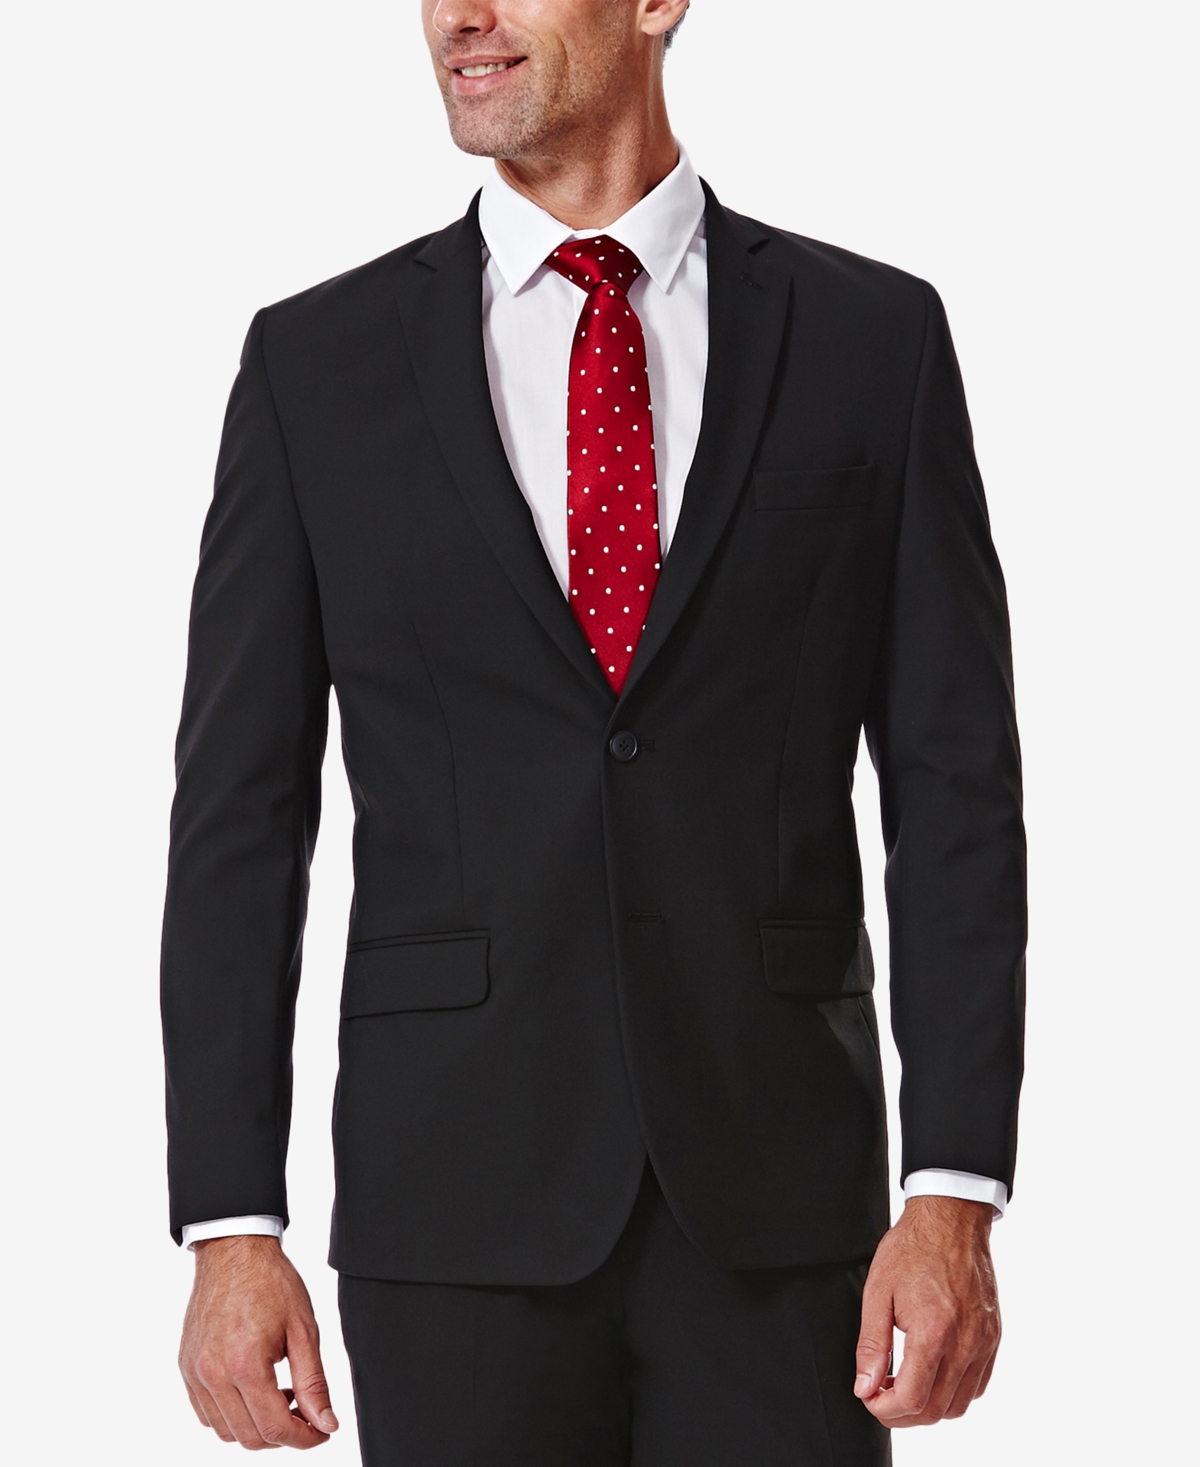 J.m. Haggar Men's Slim-Fit 4-Way Stretch Suit Jacket - Black